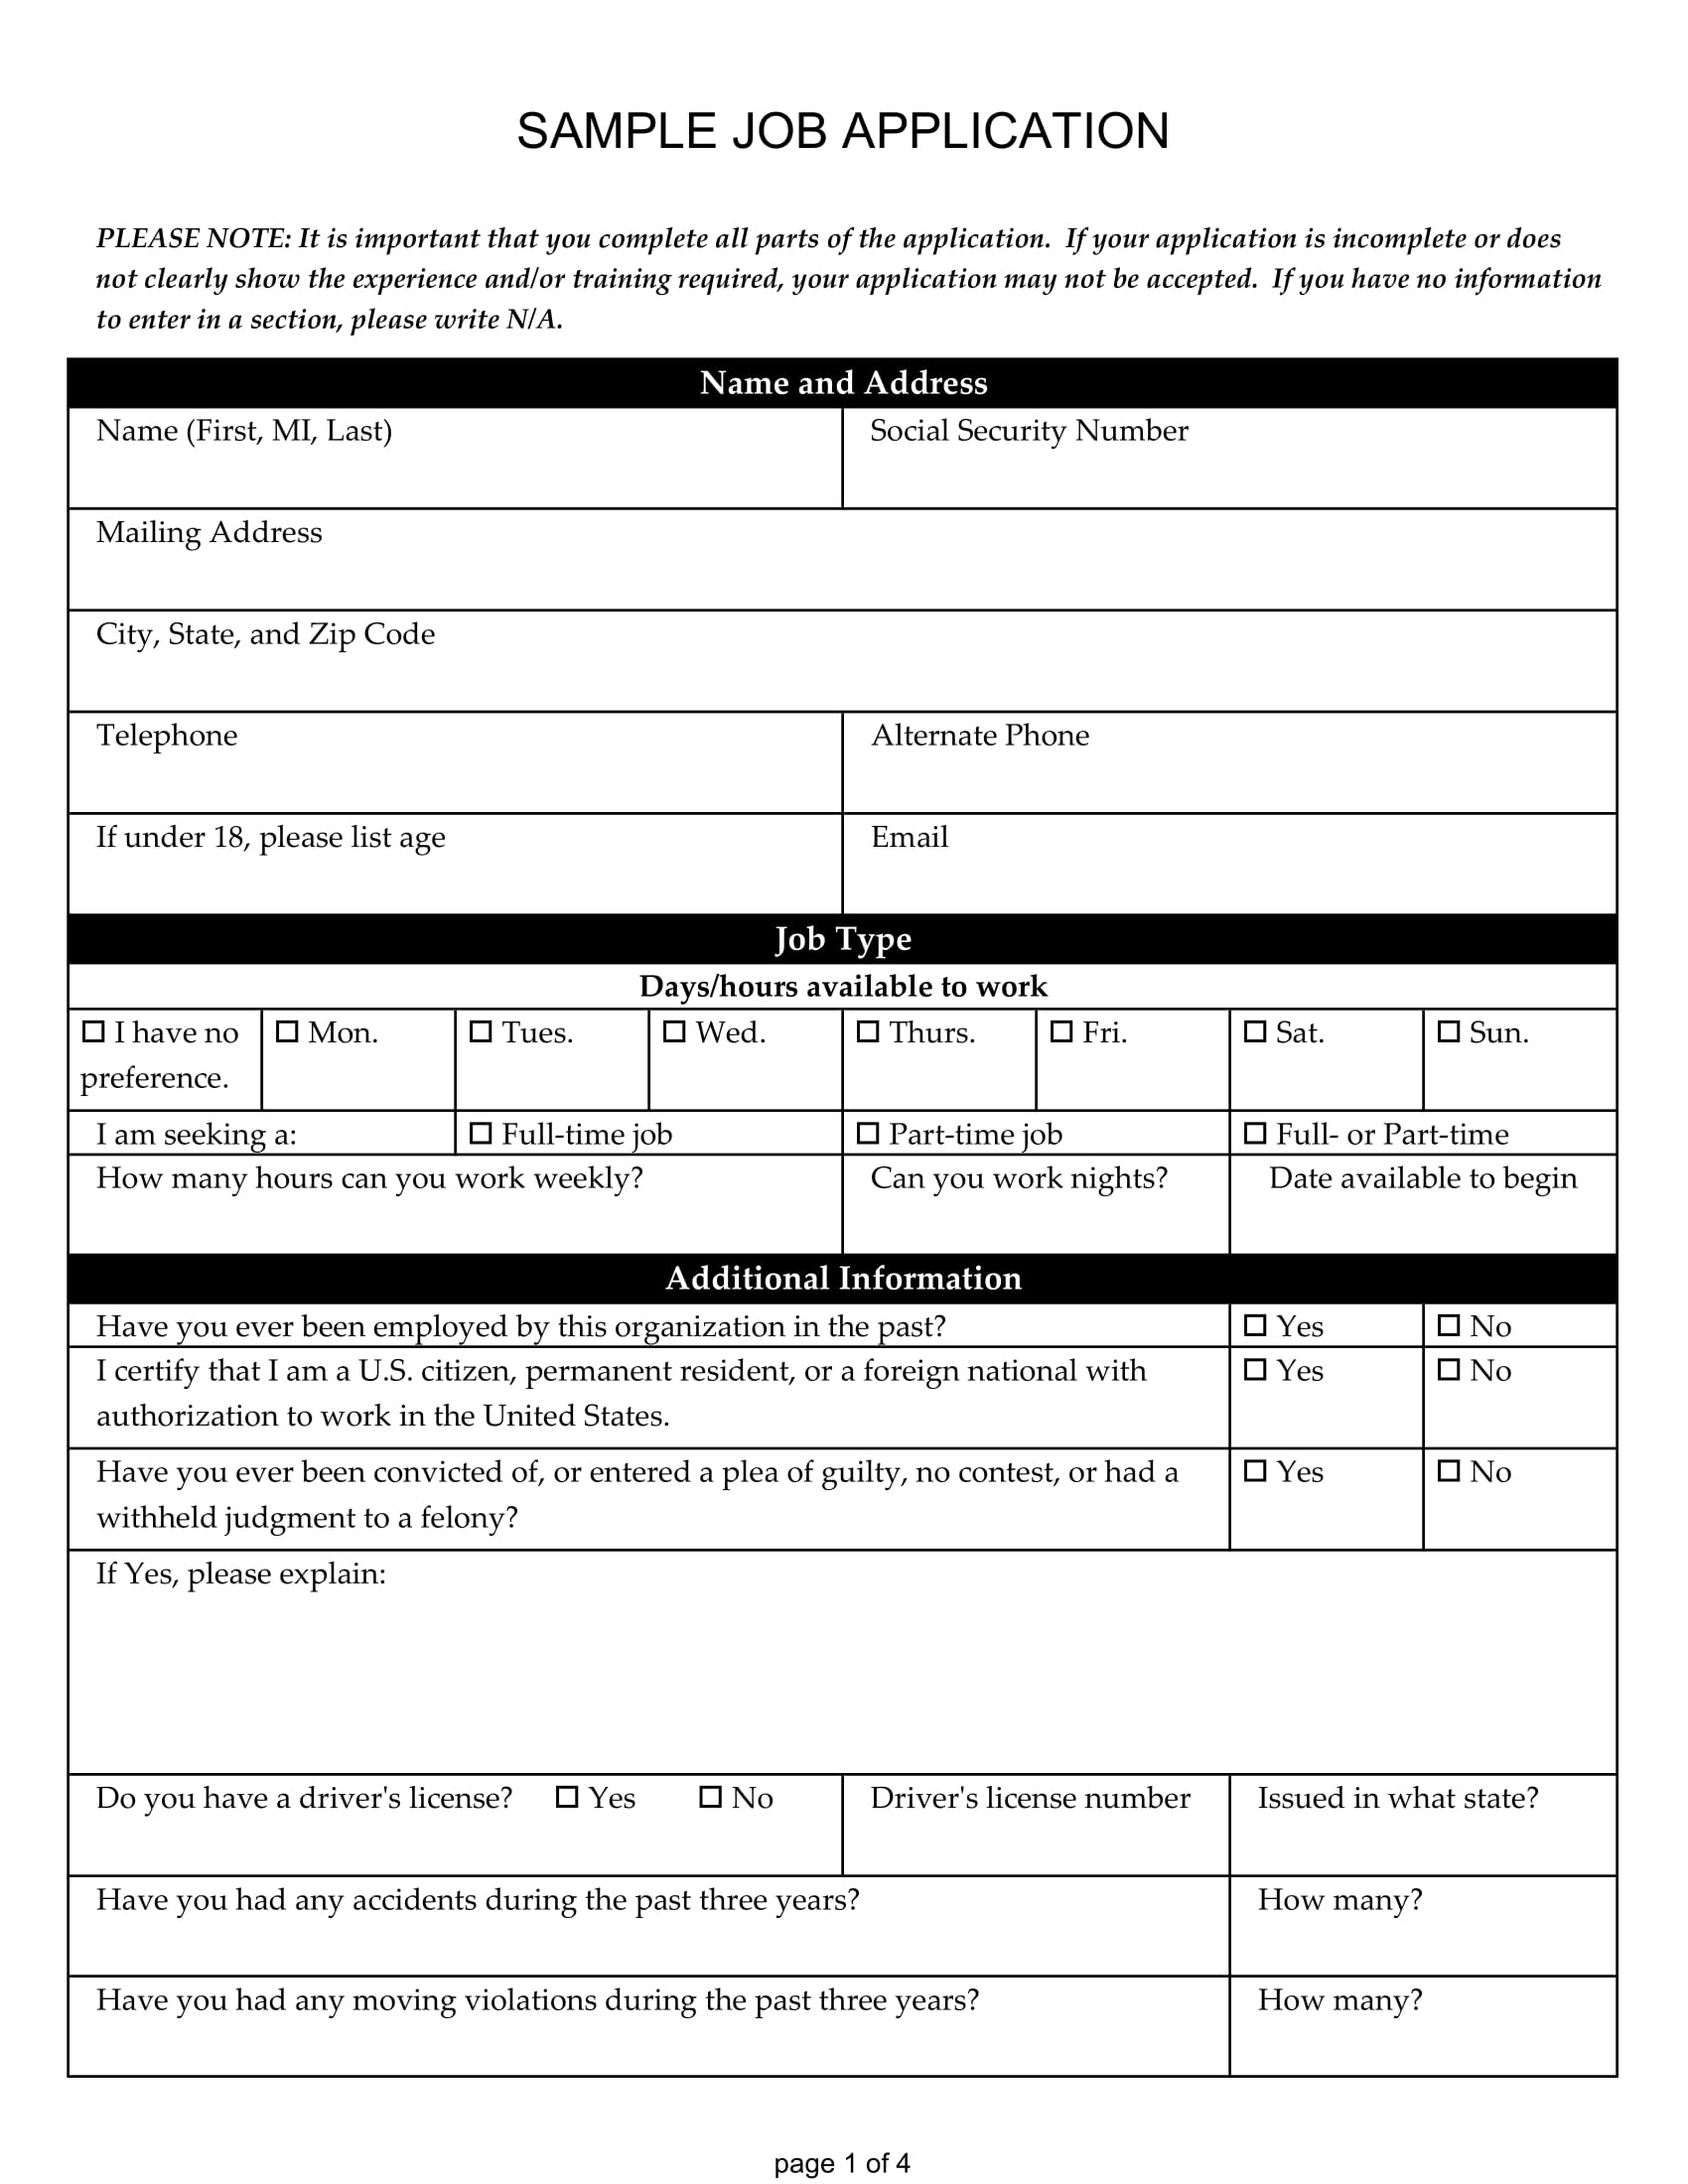 Downloadable job application forms